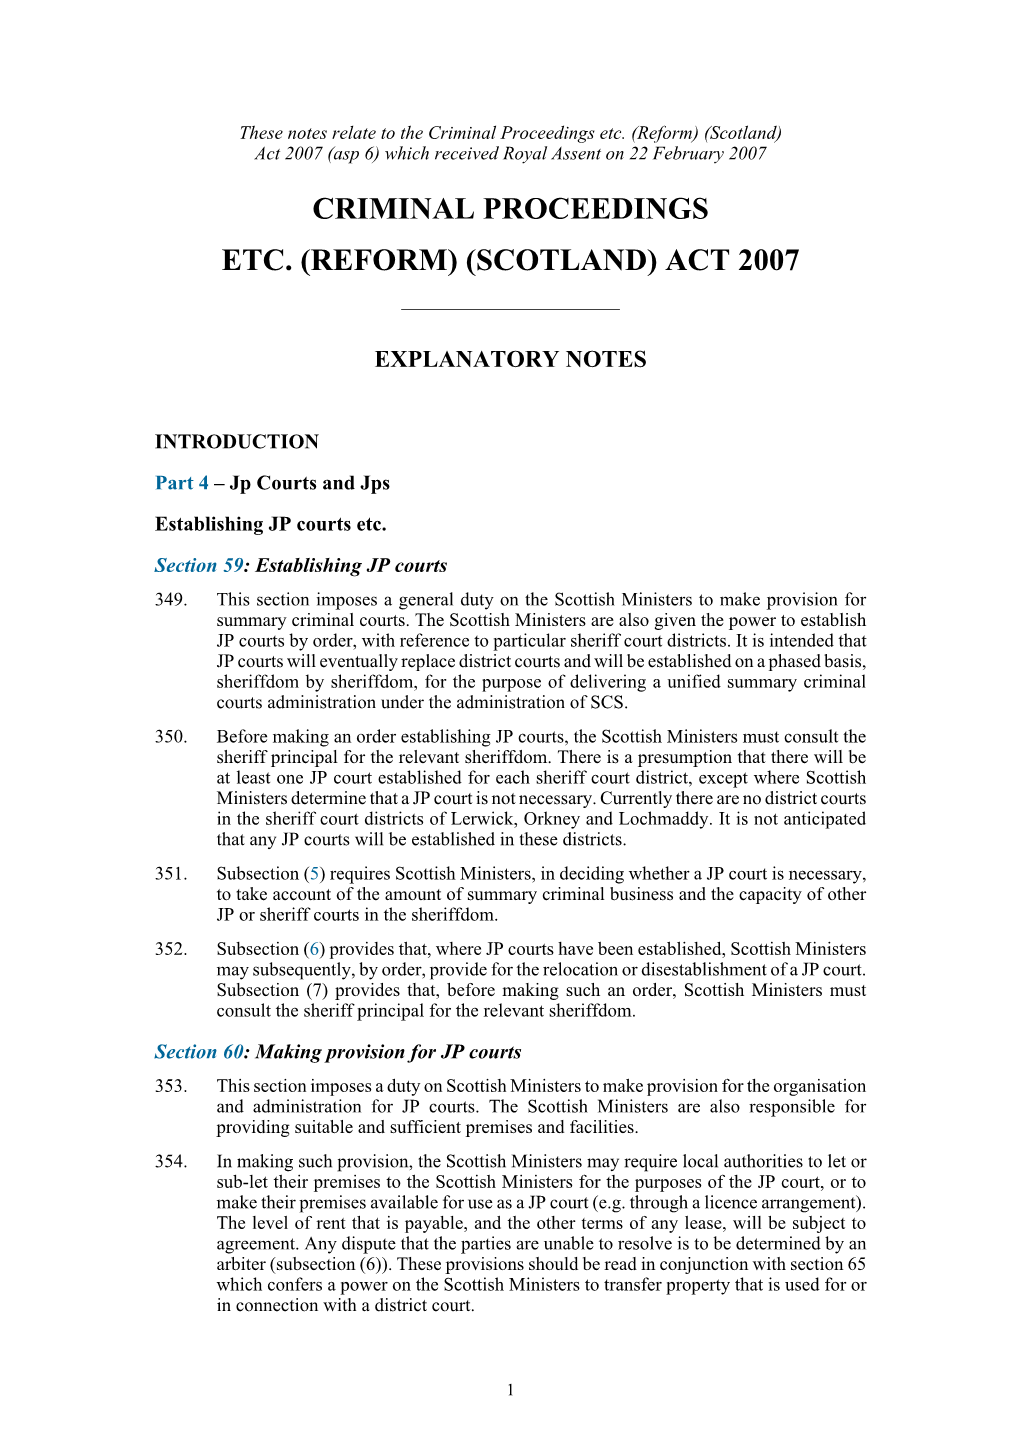 Explanatory Notes to Criminal Proceedings Etc. (Reform